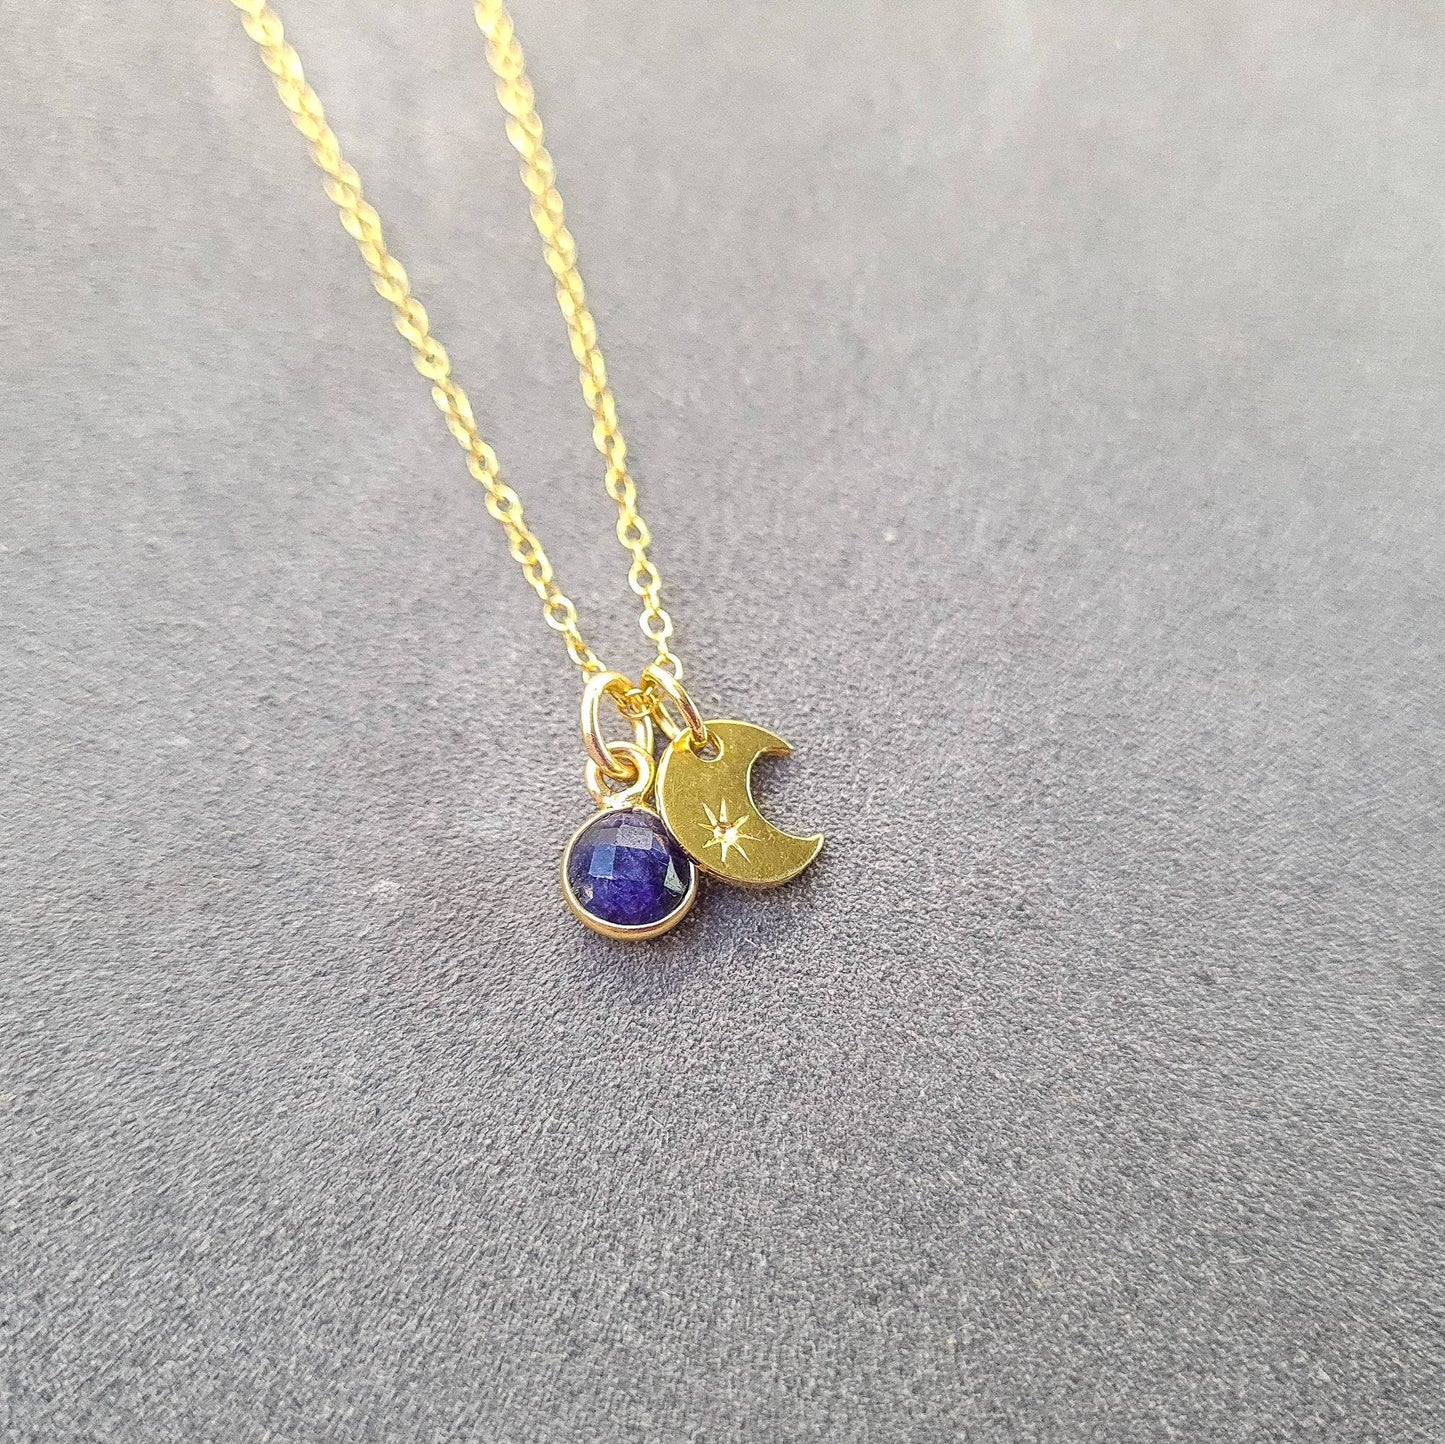 Sapphire pendant gold vermeil silver crescent moon necklace - celestial September birthstone jewellery